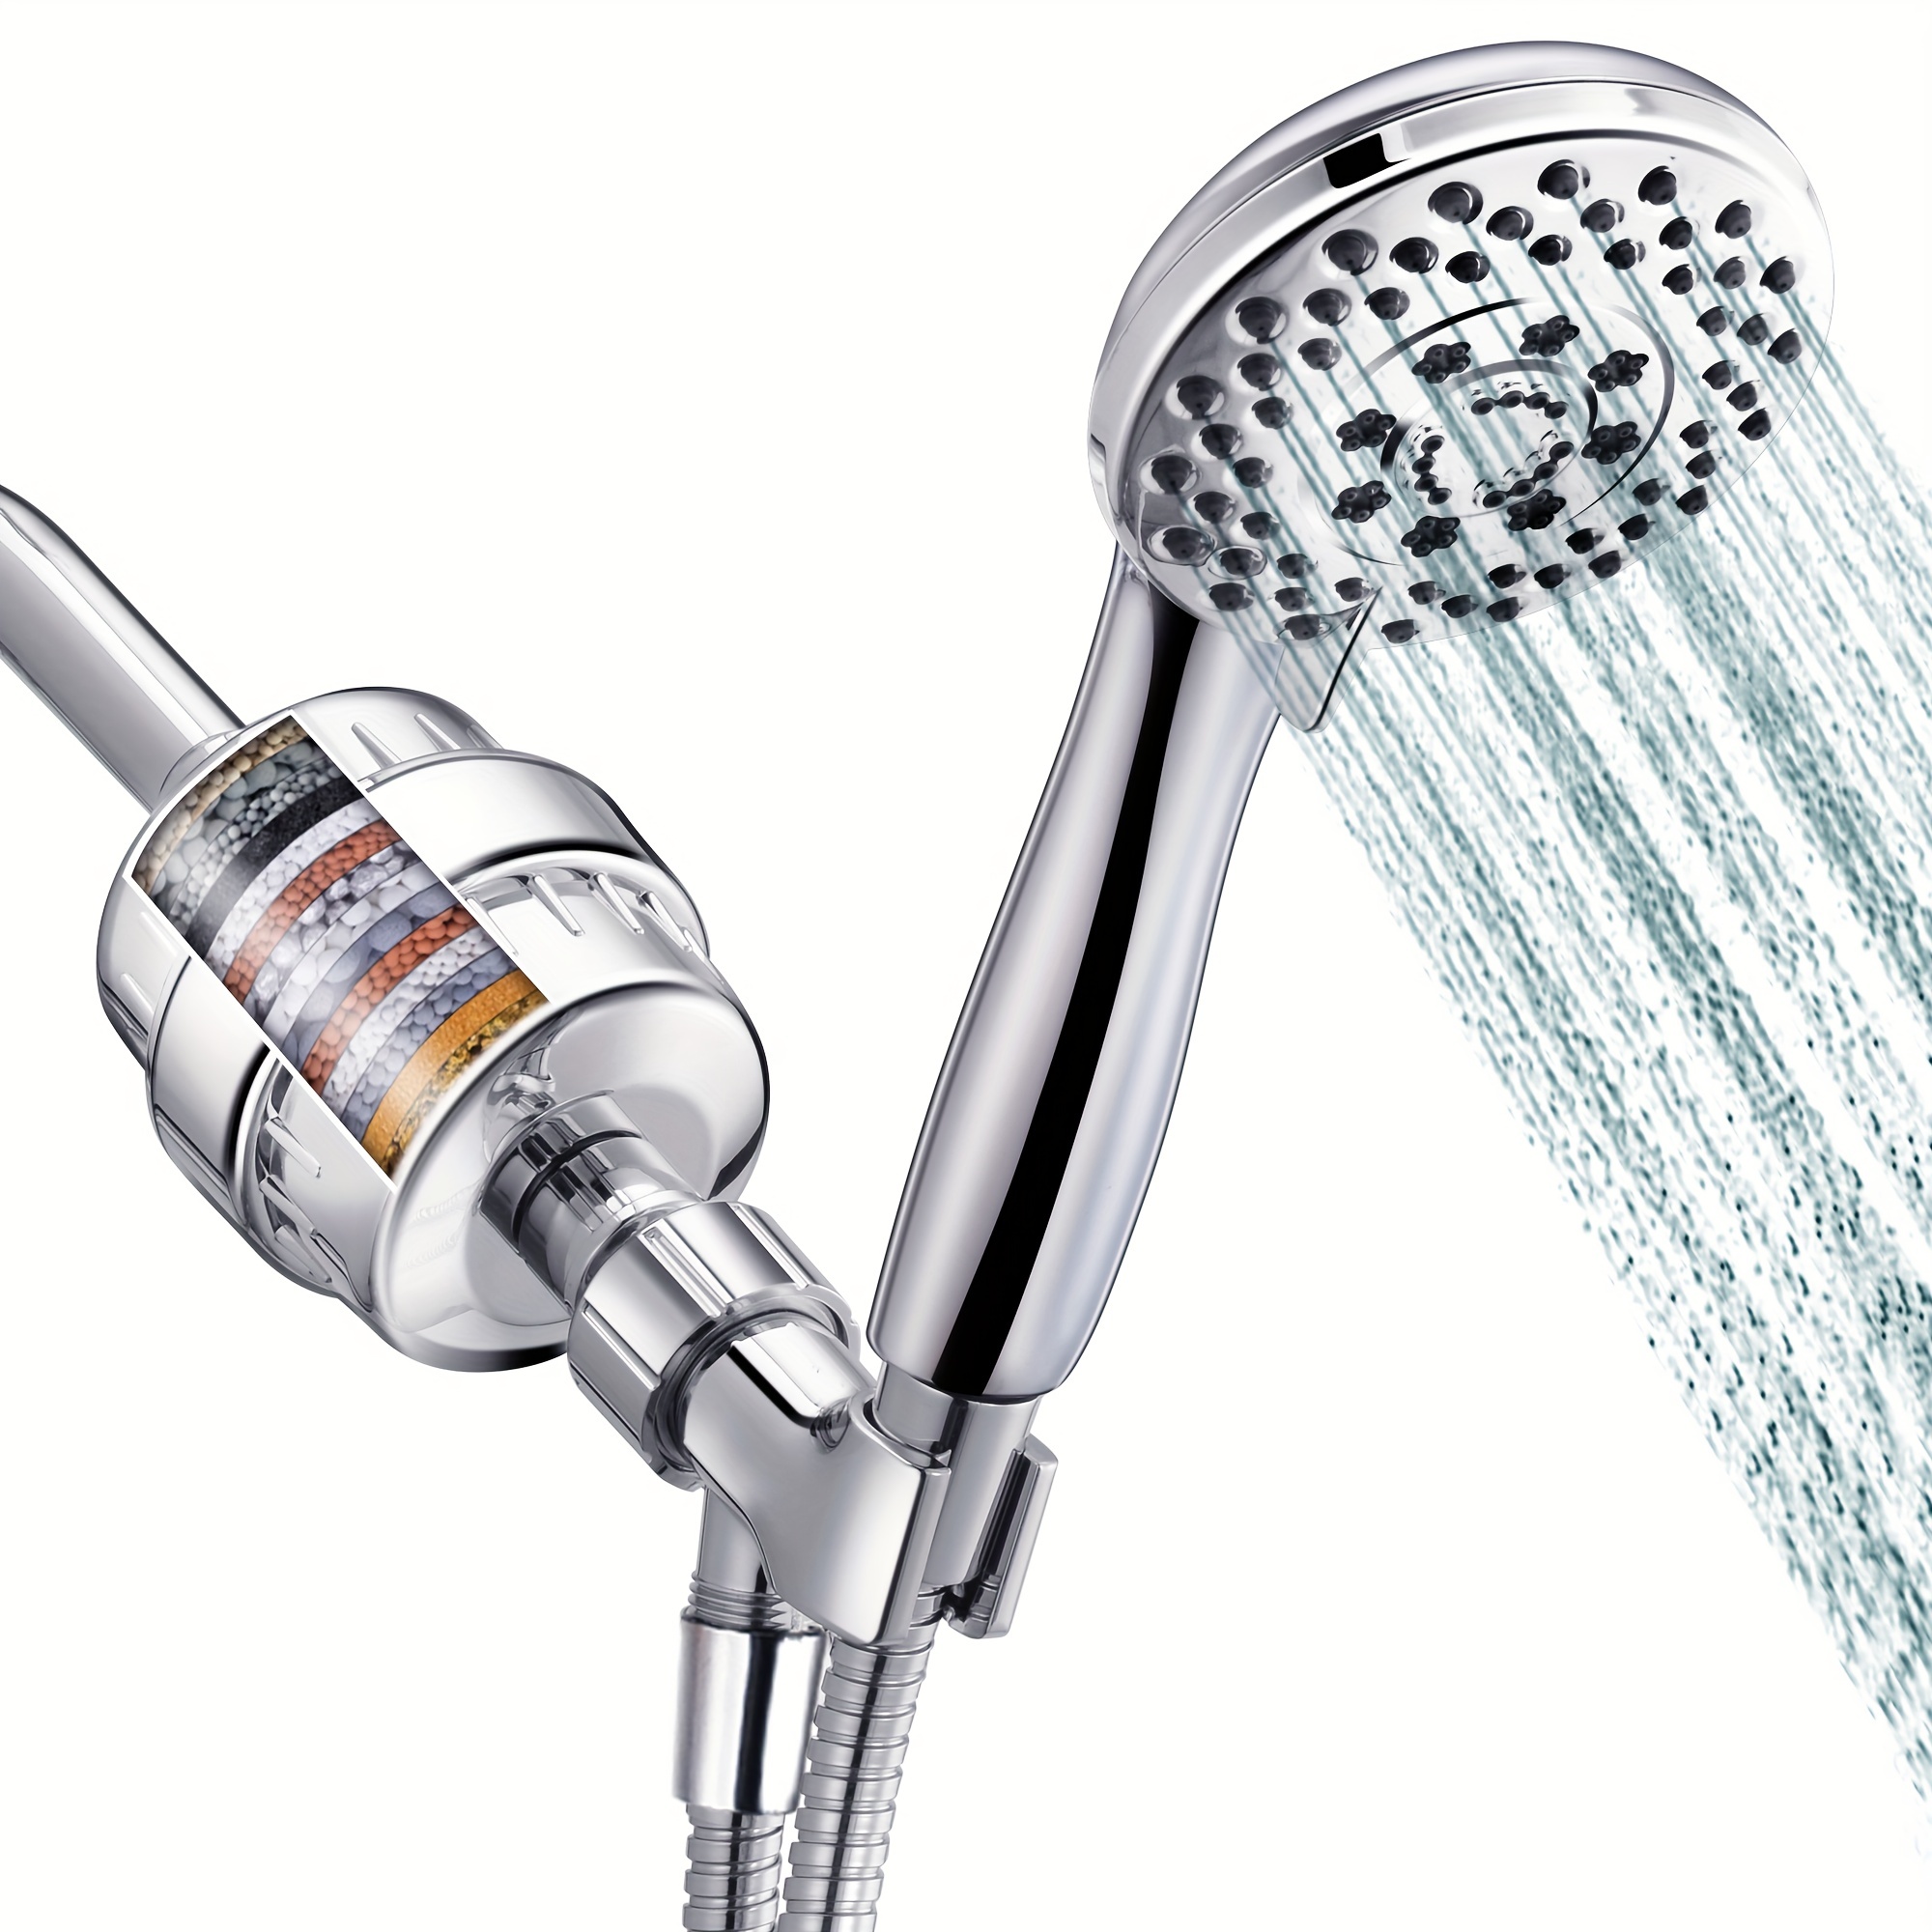 Cuánto dura un filtro de agua purificador para ducha? – Sanaté Filtros